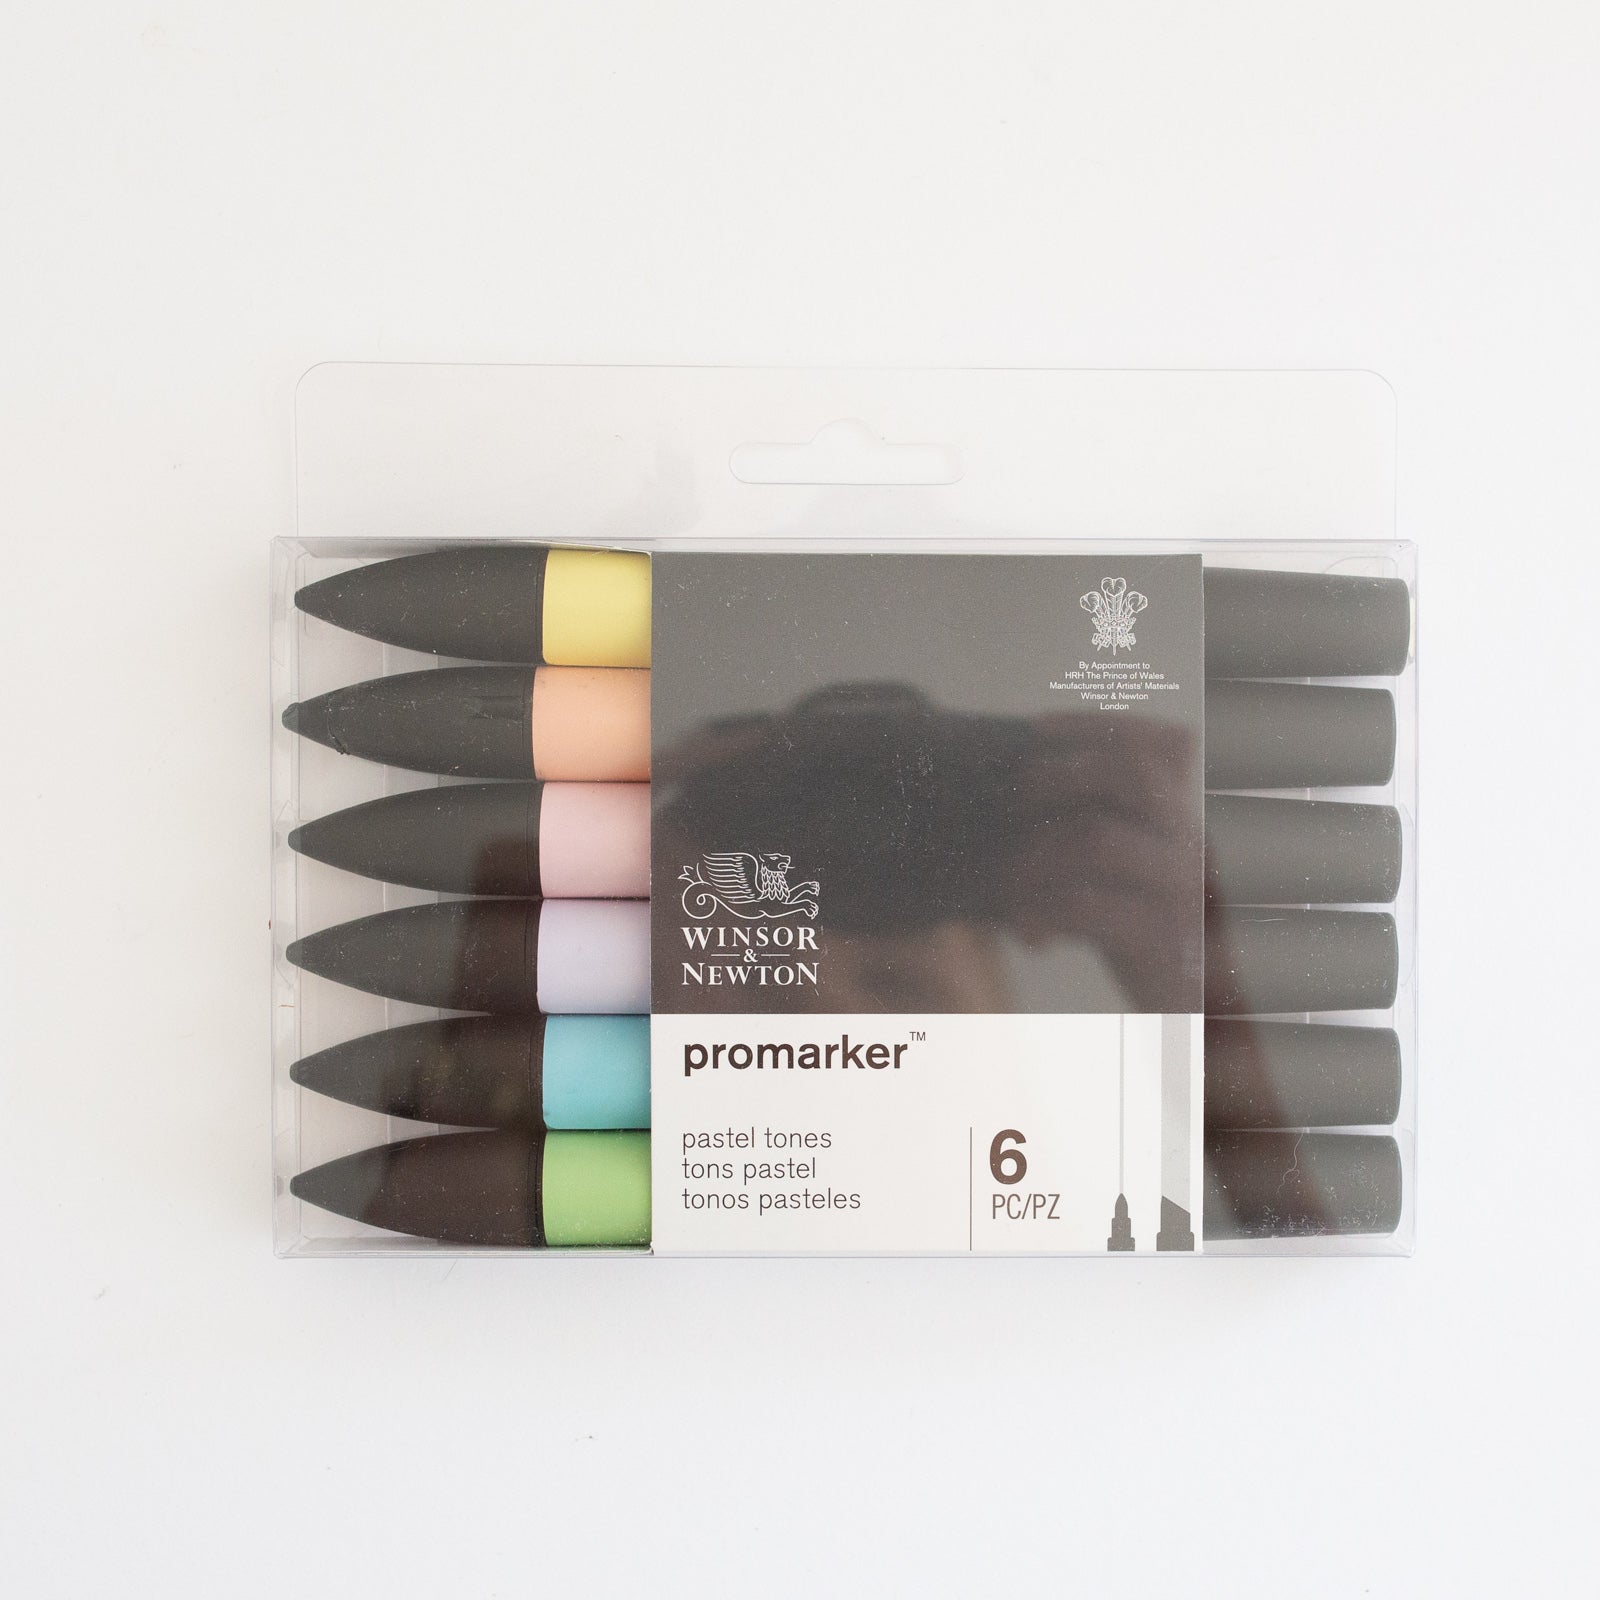 Winsor & Newton Promarker Set Pastels – Splendith